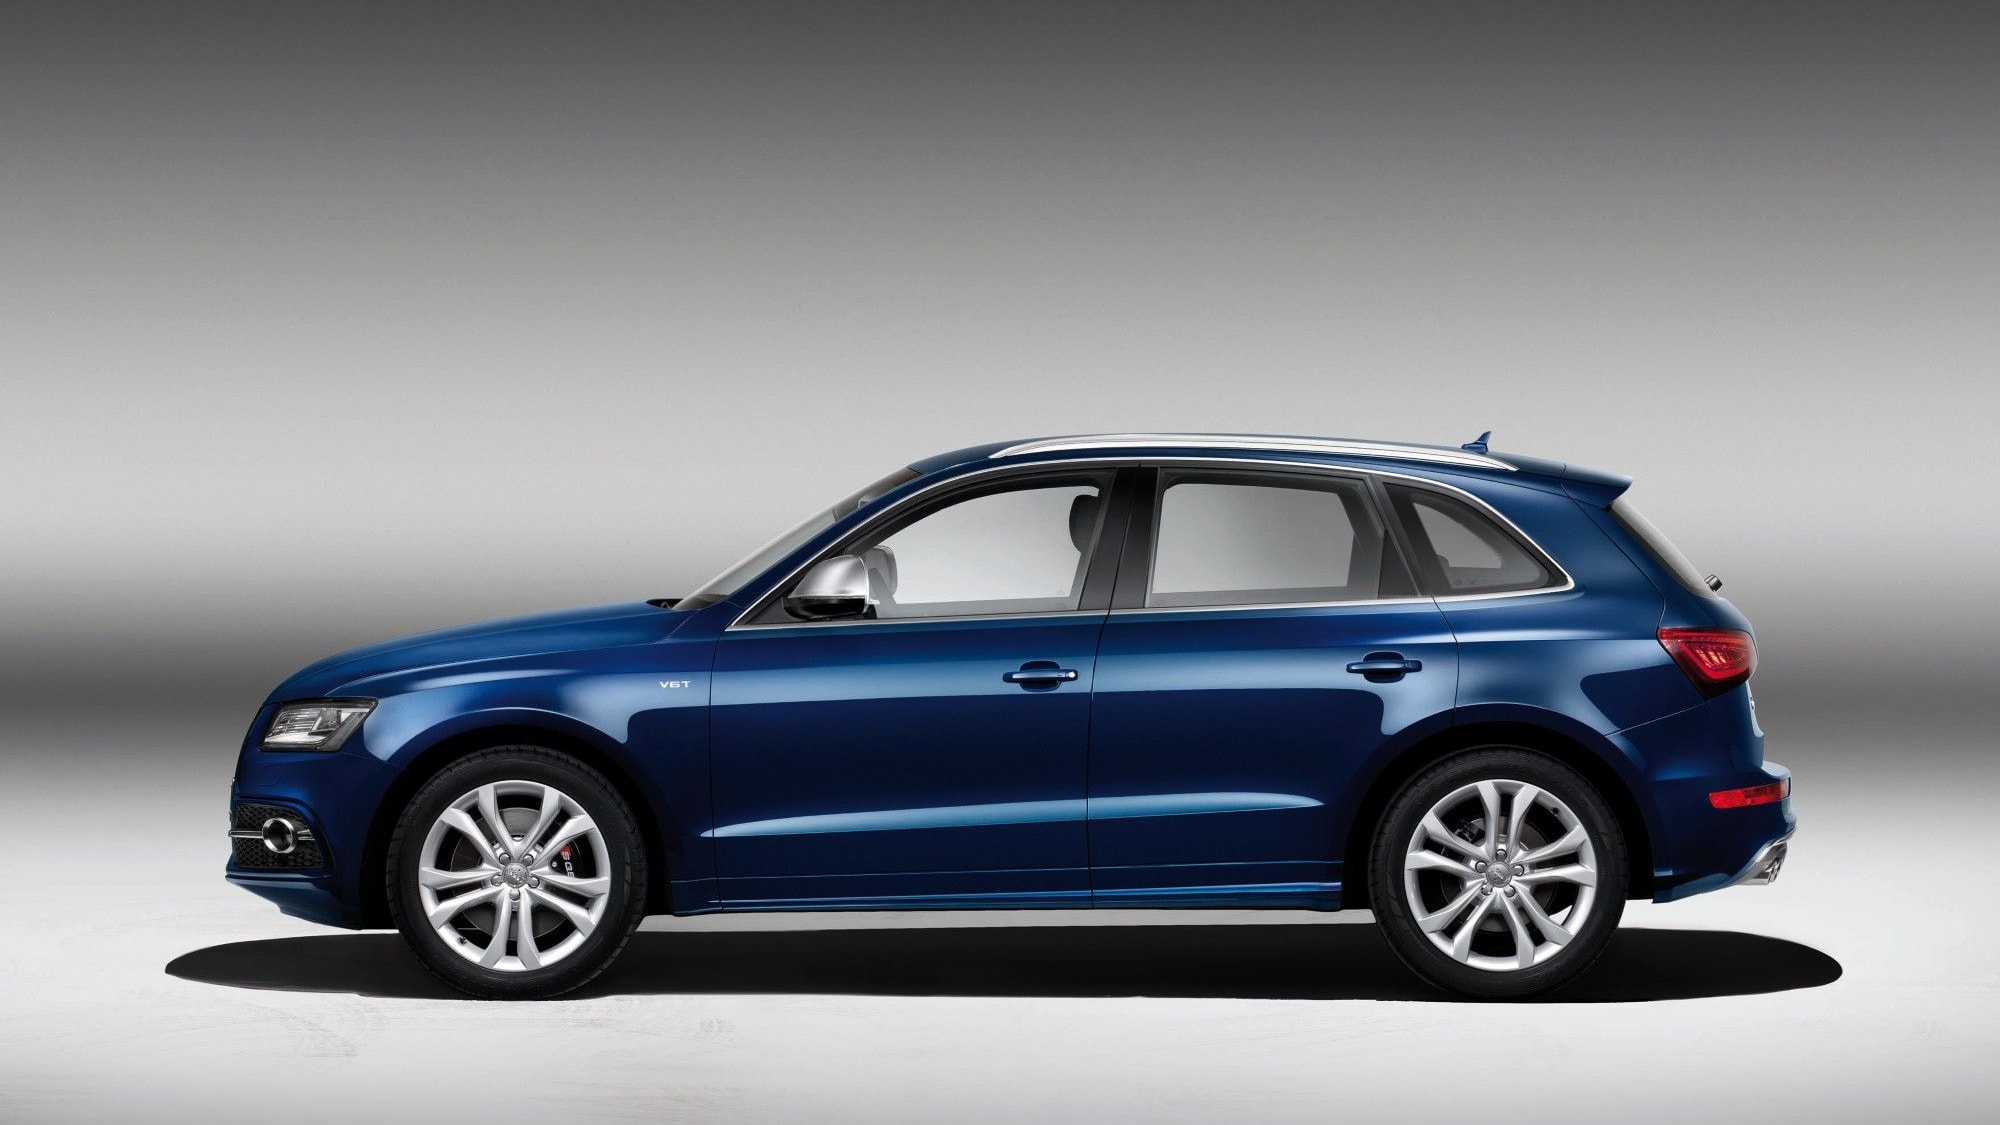 Audi SQ5 twin-turbo performance diesel crossover